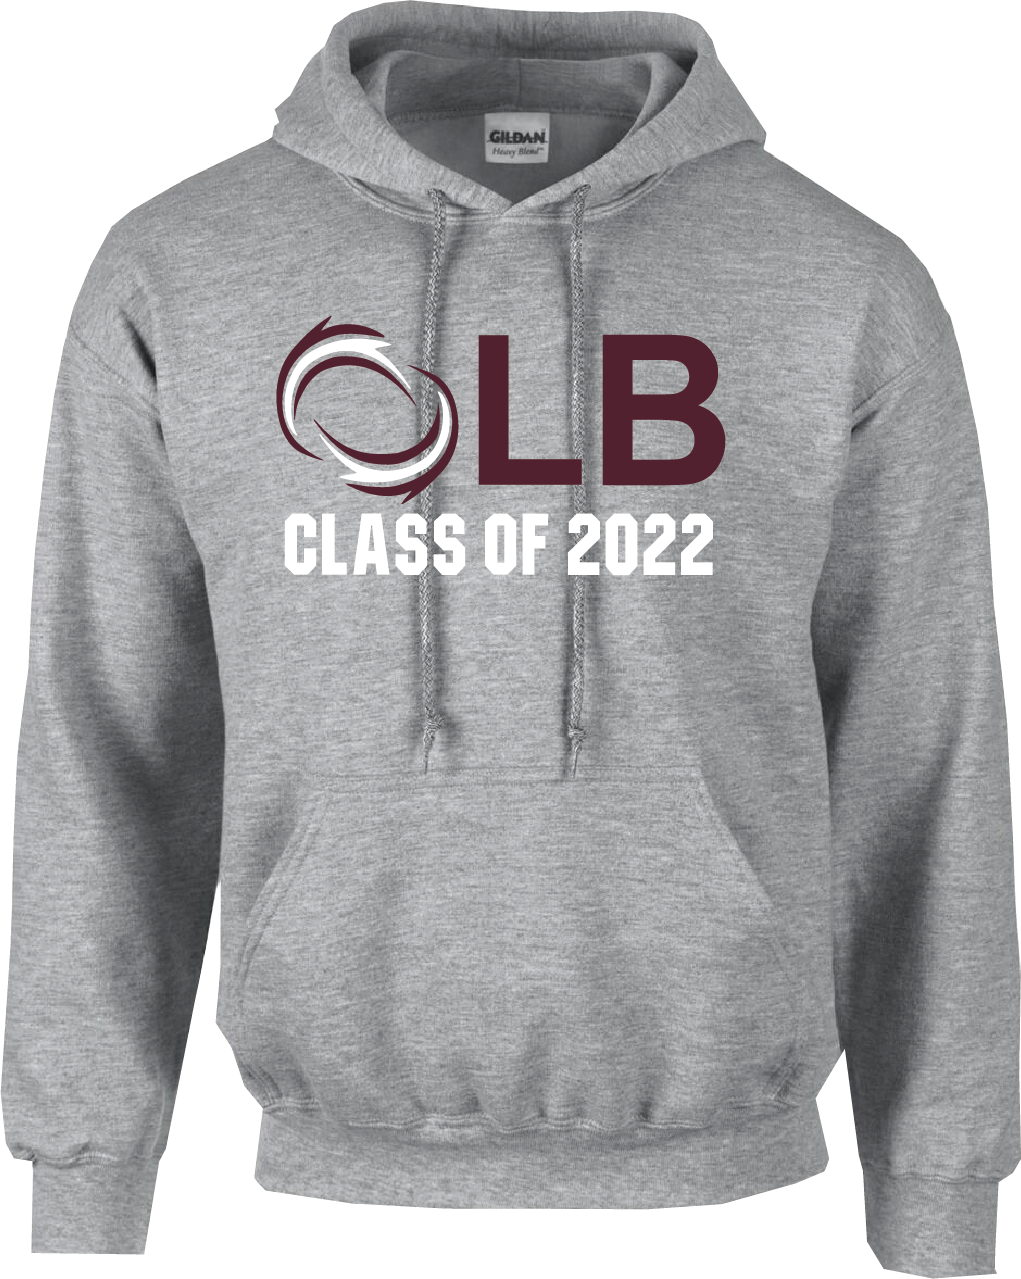 Class of 2022 Hoody